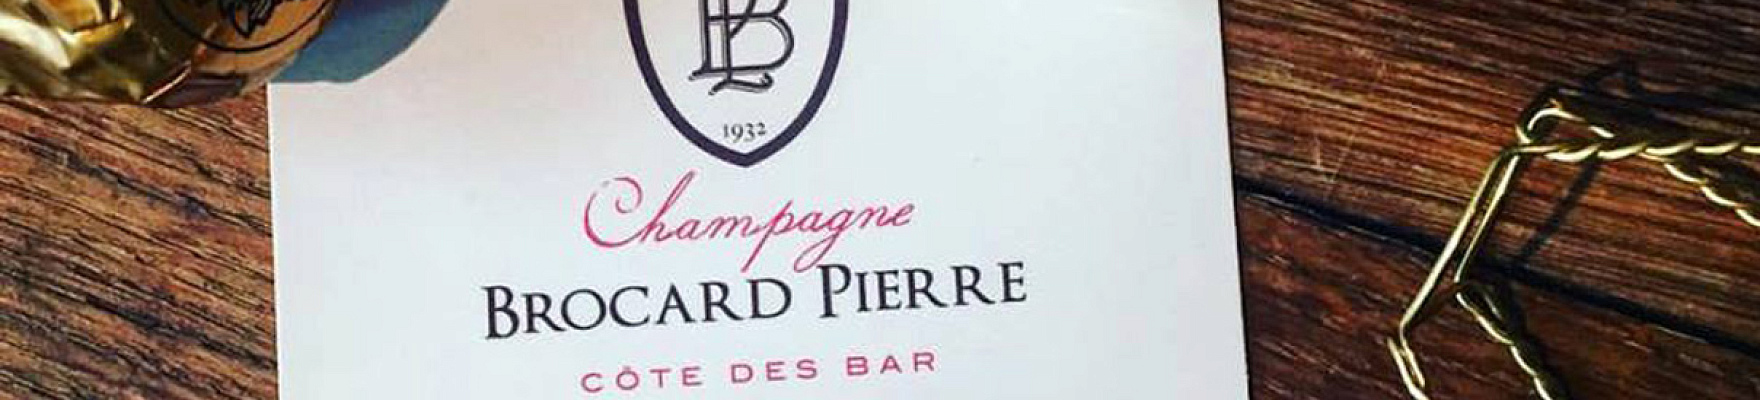 Champagne Brocard Pierre